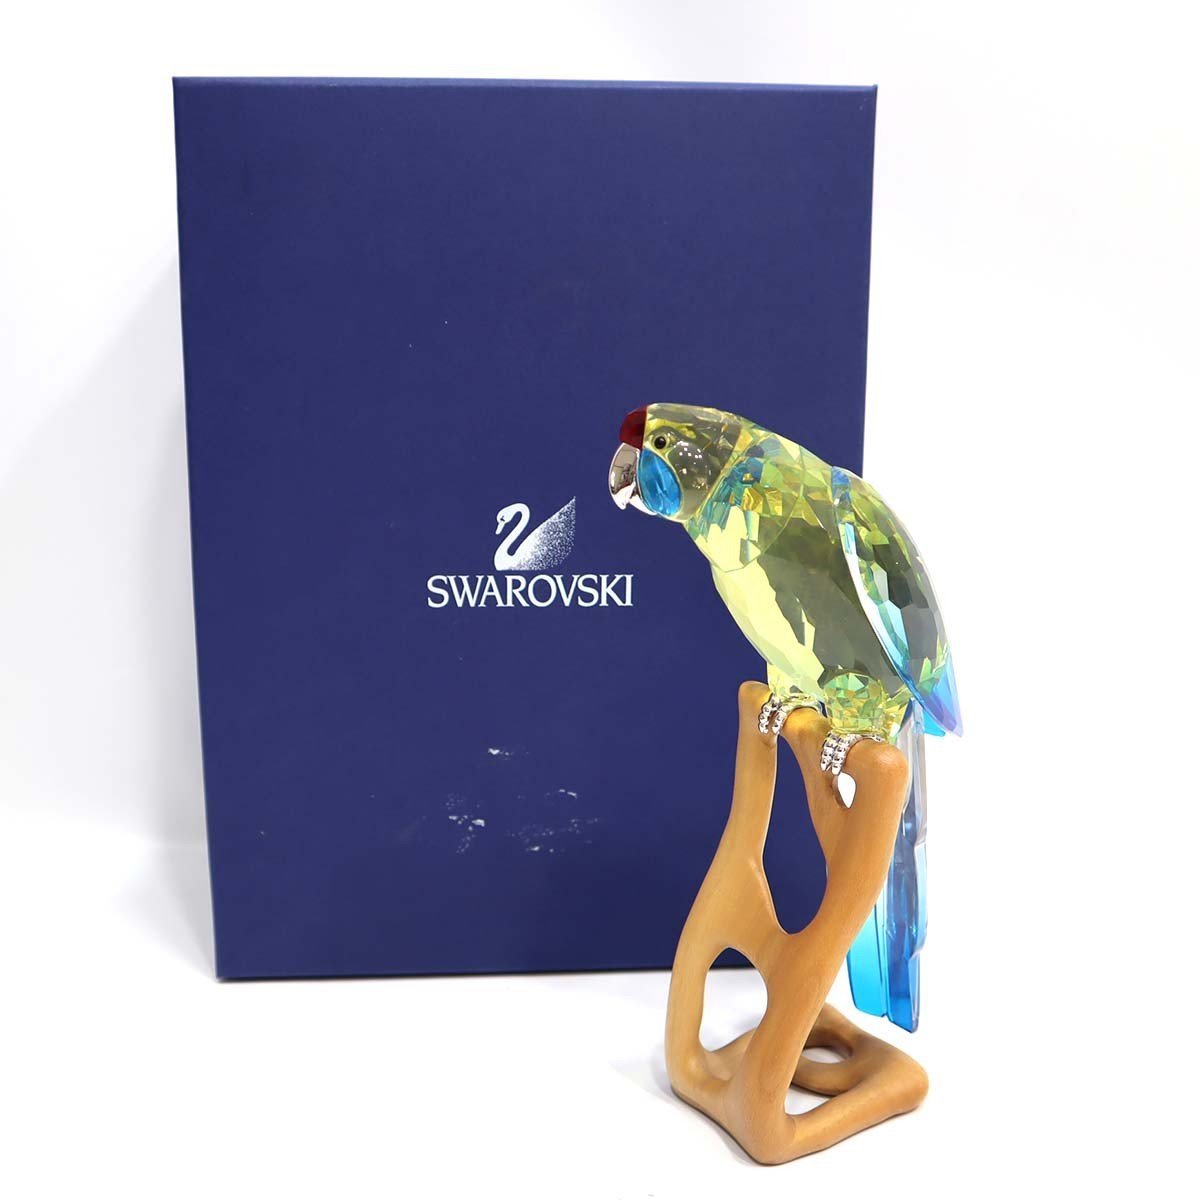  pawnshop ornament Swarovski green rose la parakeet crystal 901601figyu Lynn 23k486-31... pawnshop 